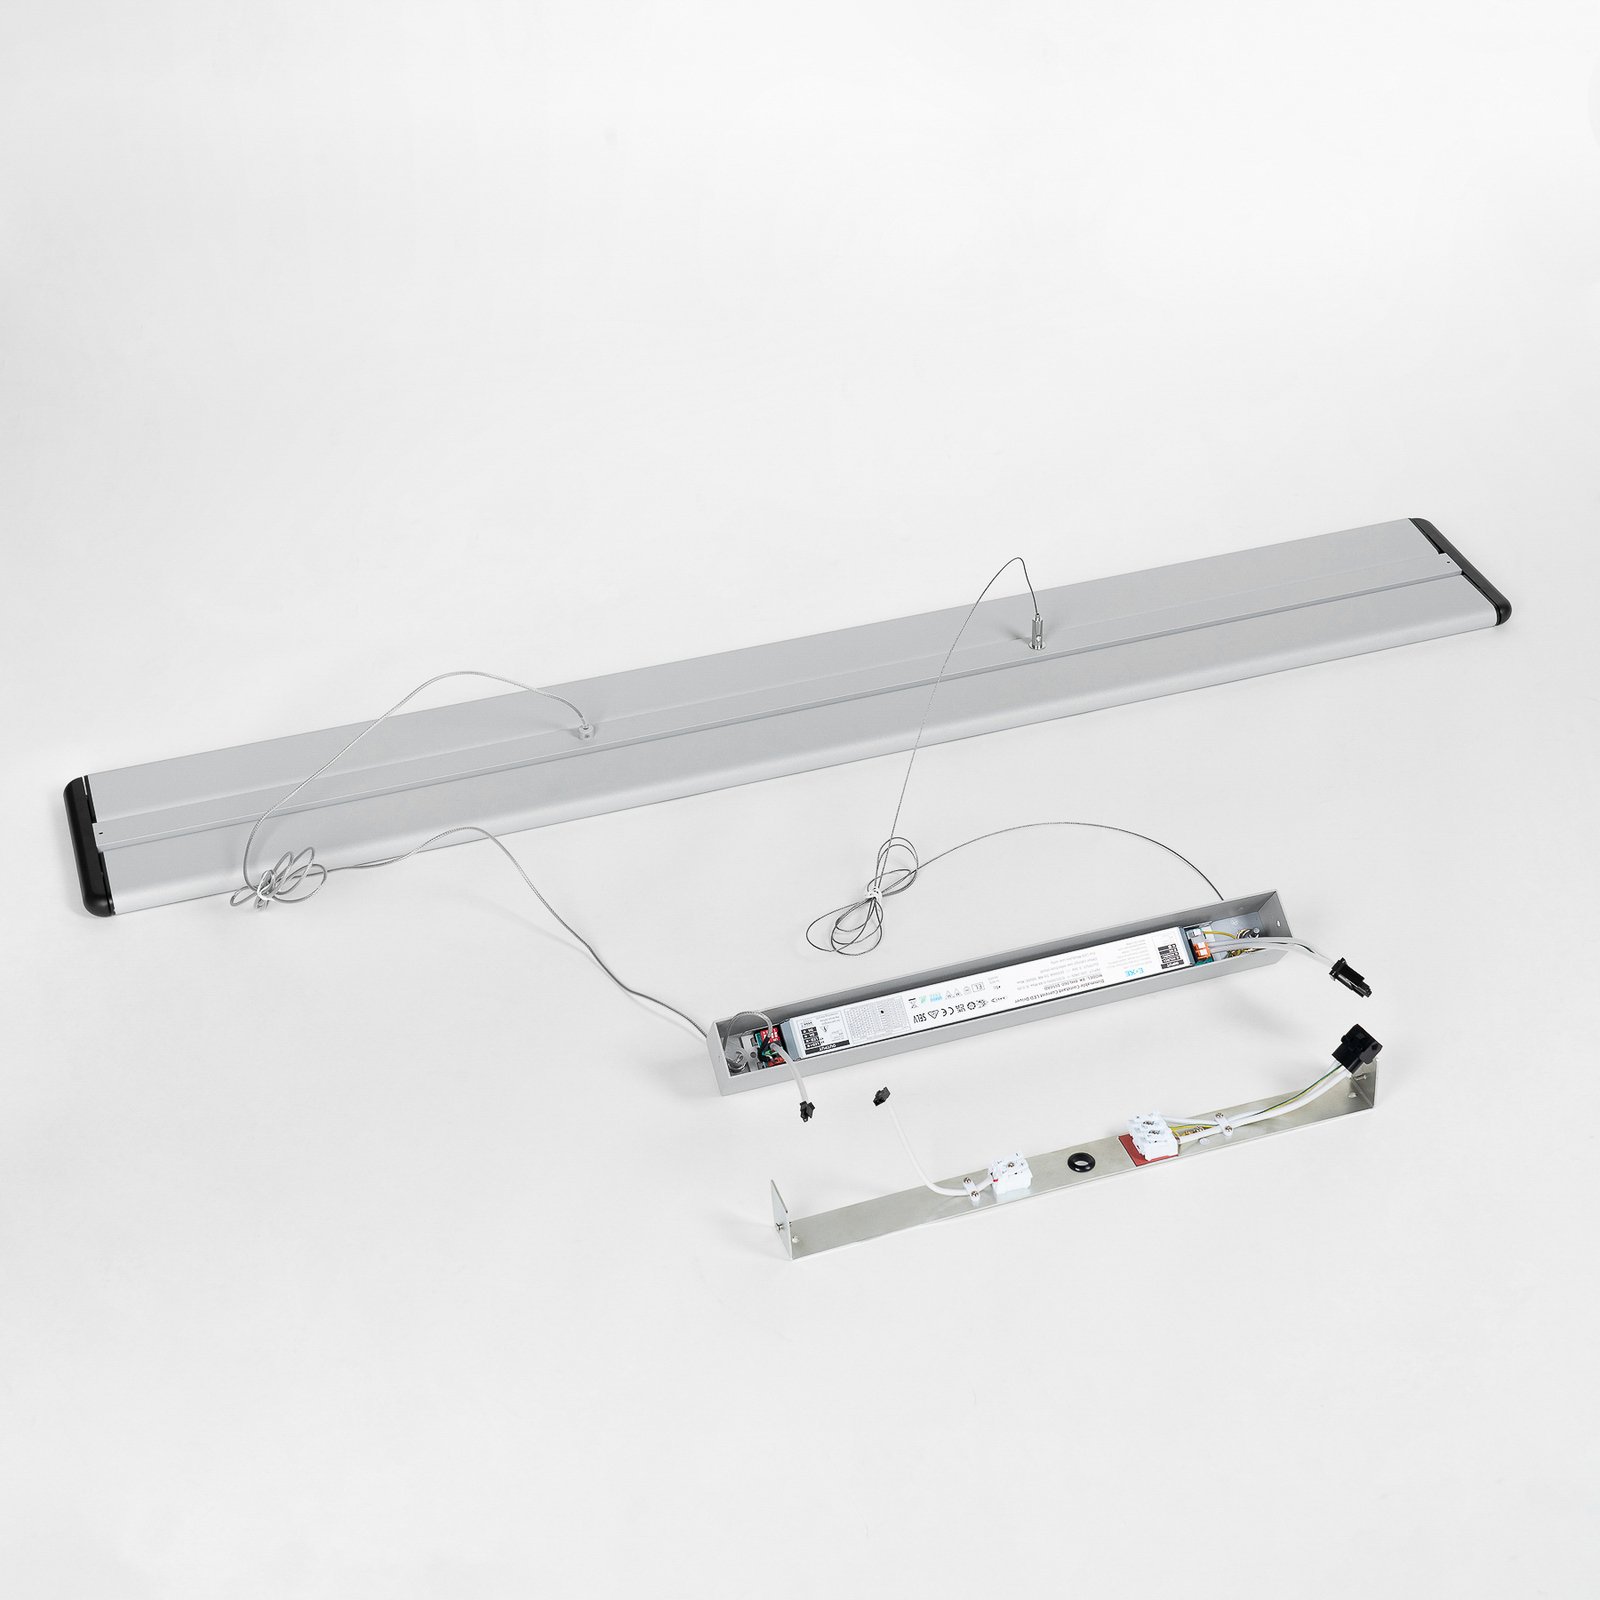 Prios Zyair LED hanglamp zilver aluminium kunststof